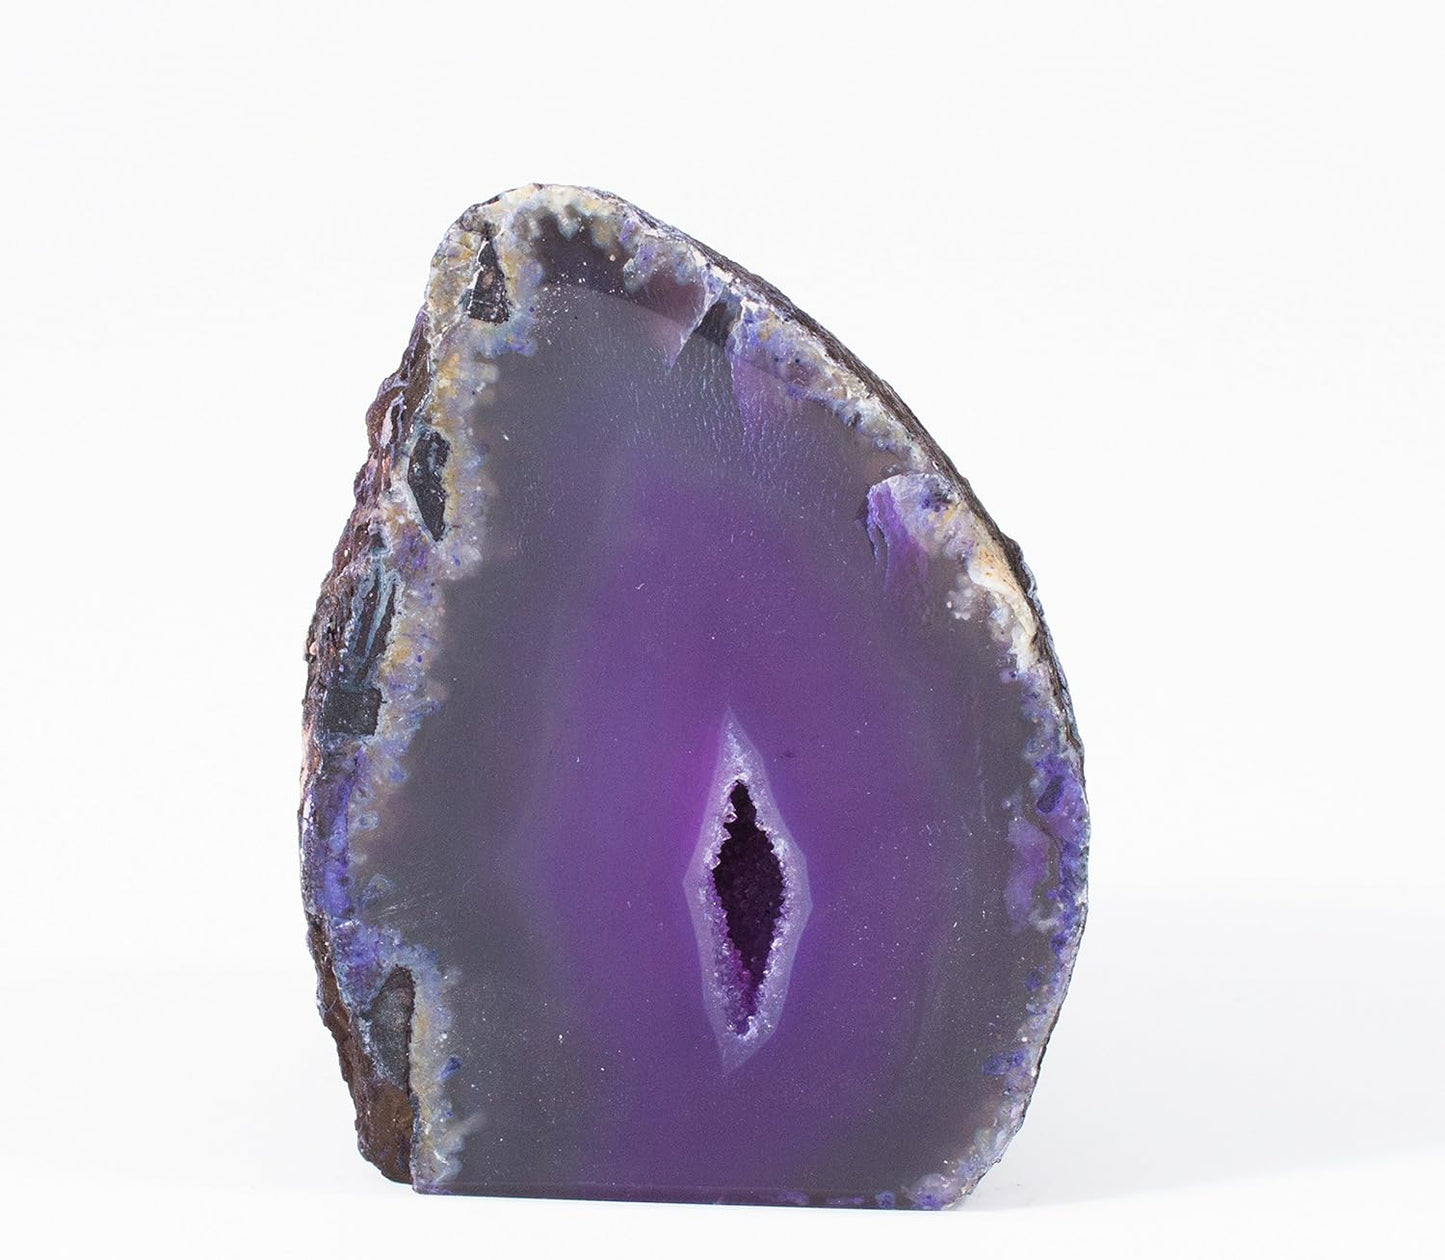 Polished Purple Agate Geode - Large